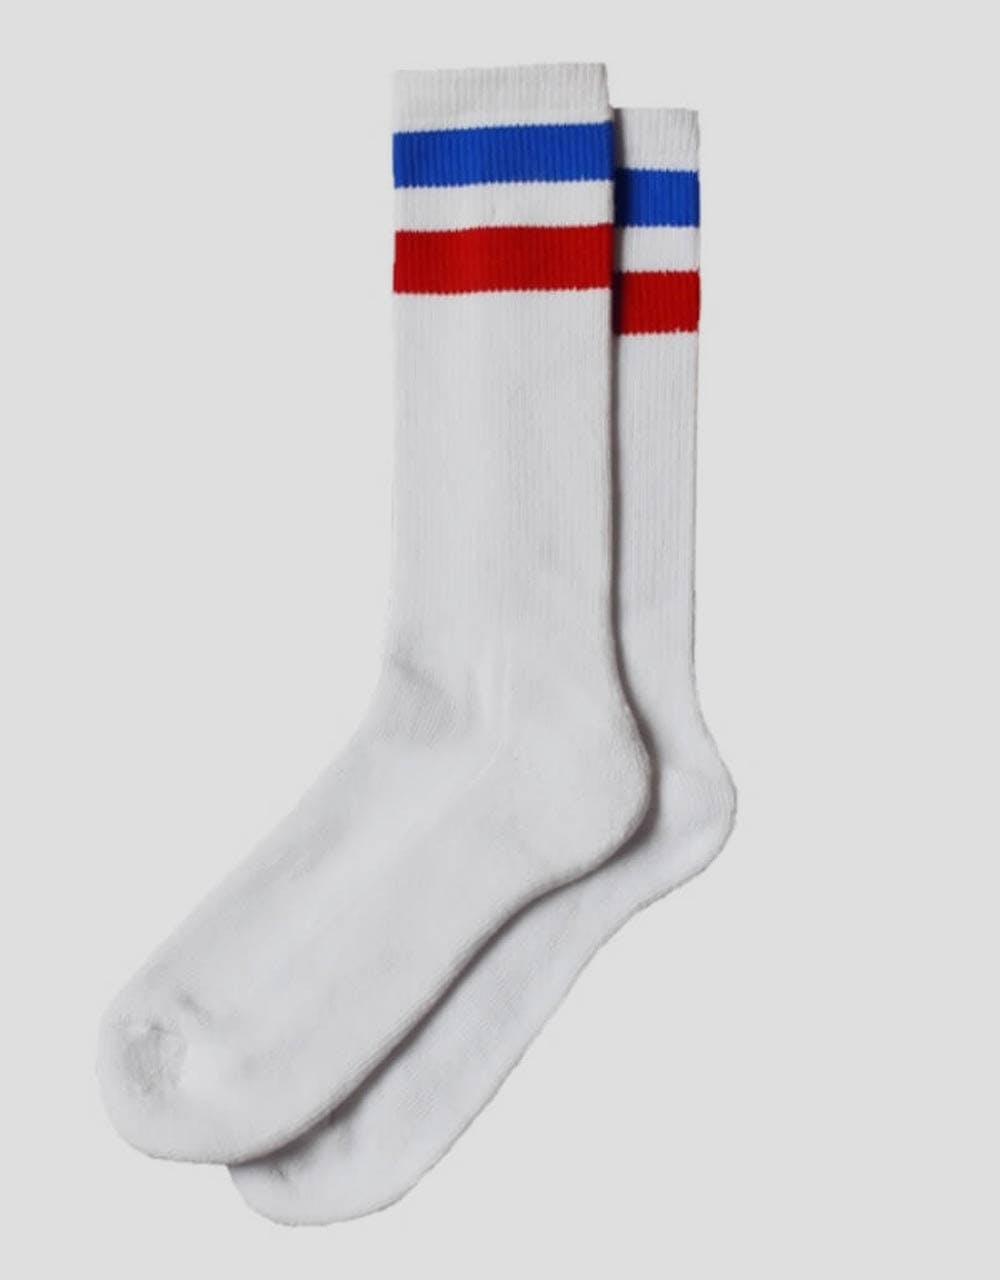 American Socks American Pride Mid High Socks - White/Red/Blue